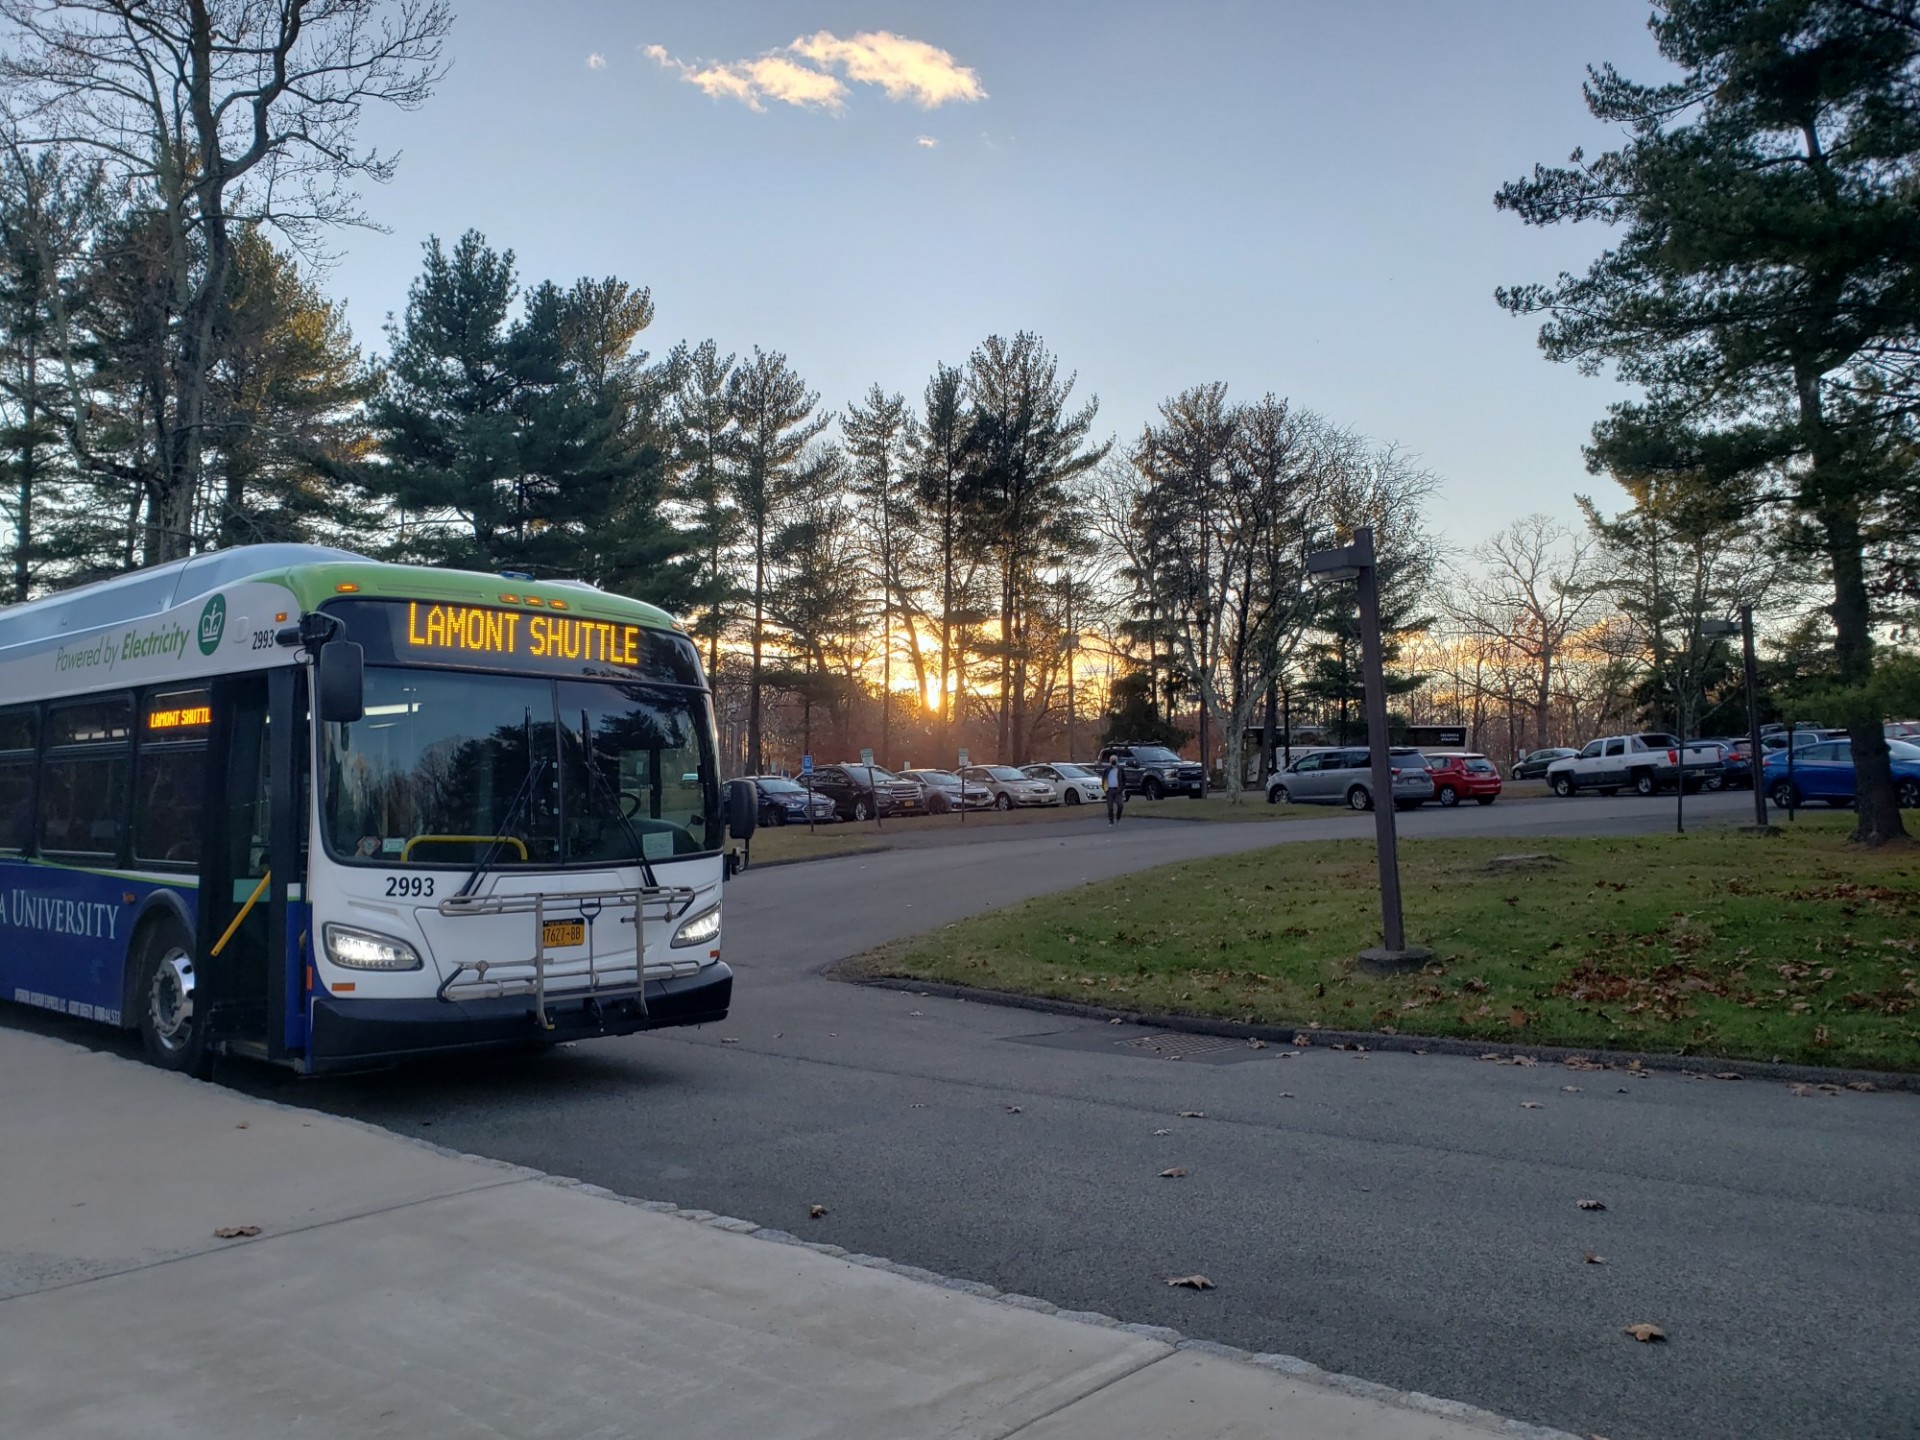 Lamont shuttle waits in campus parking lot